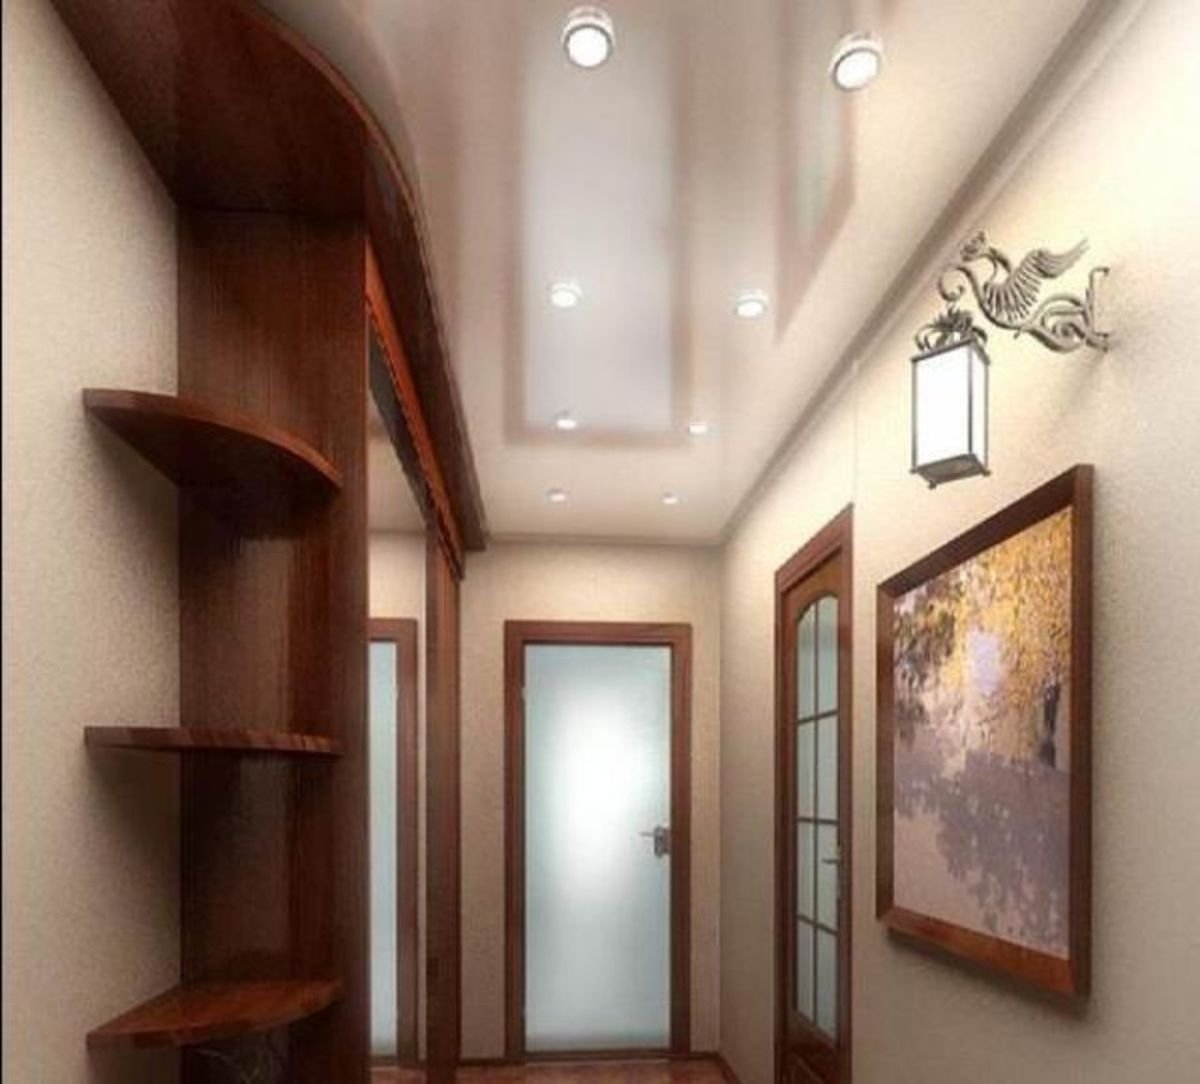 Ремонт коридора в квартире дизайн фото